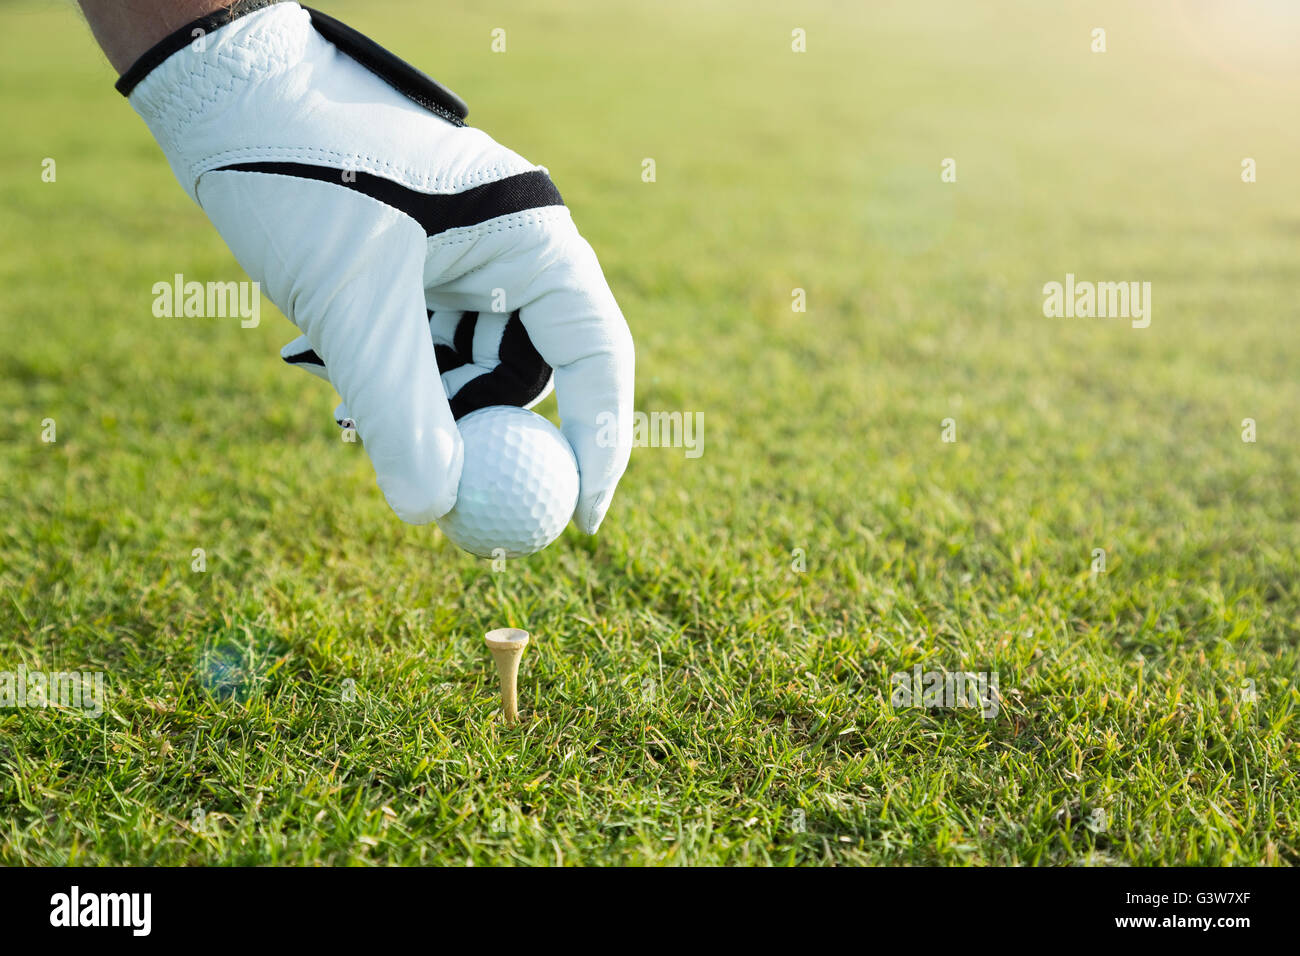 Golfer wearing glove putting ball on tee Stock Photo